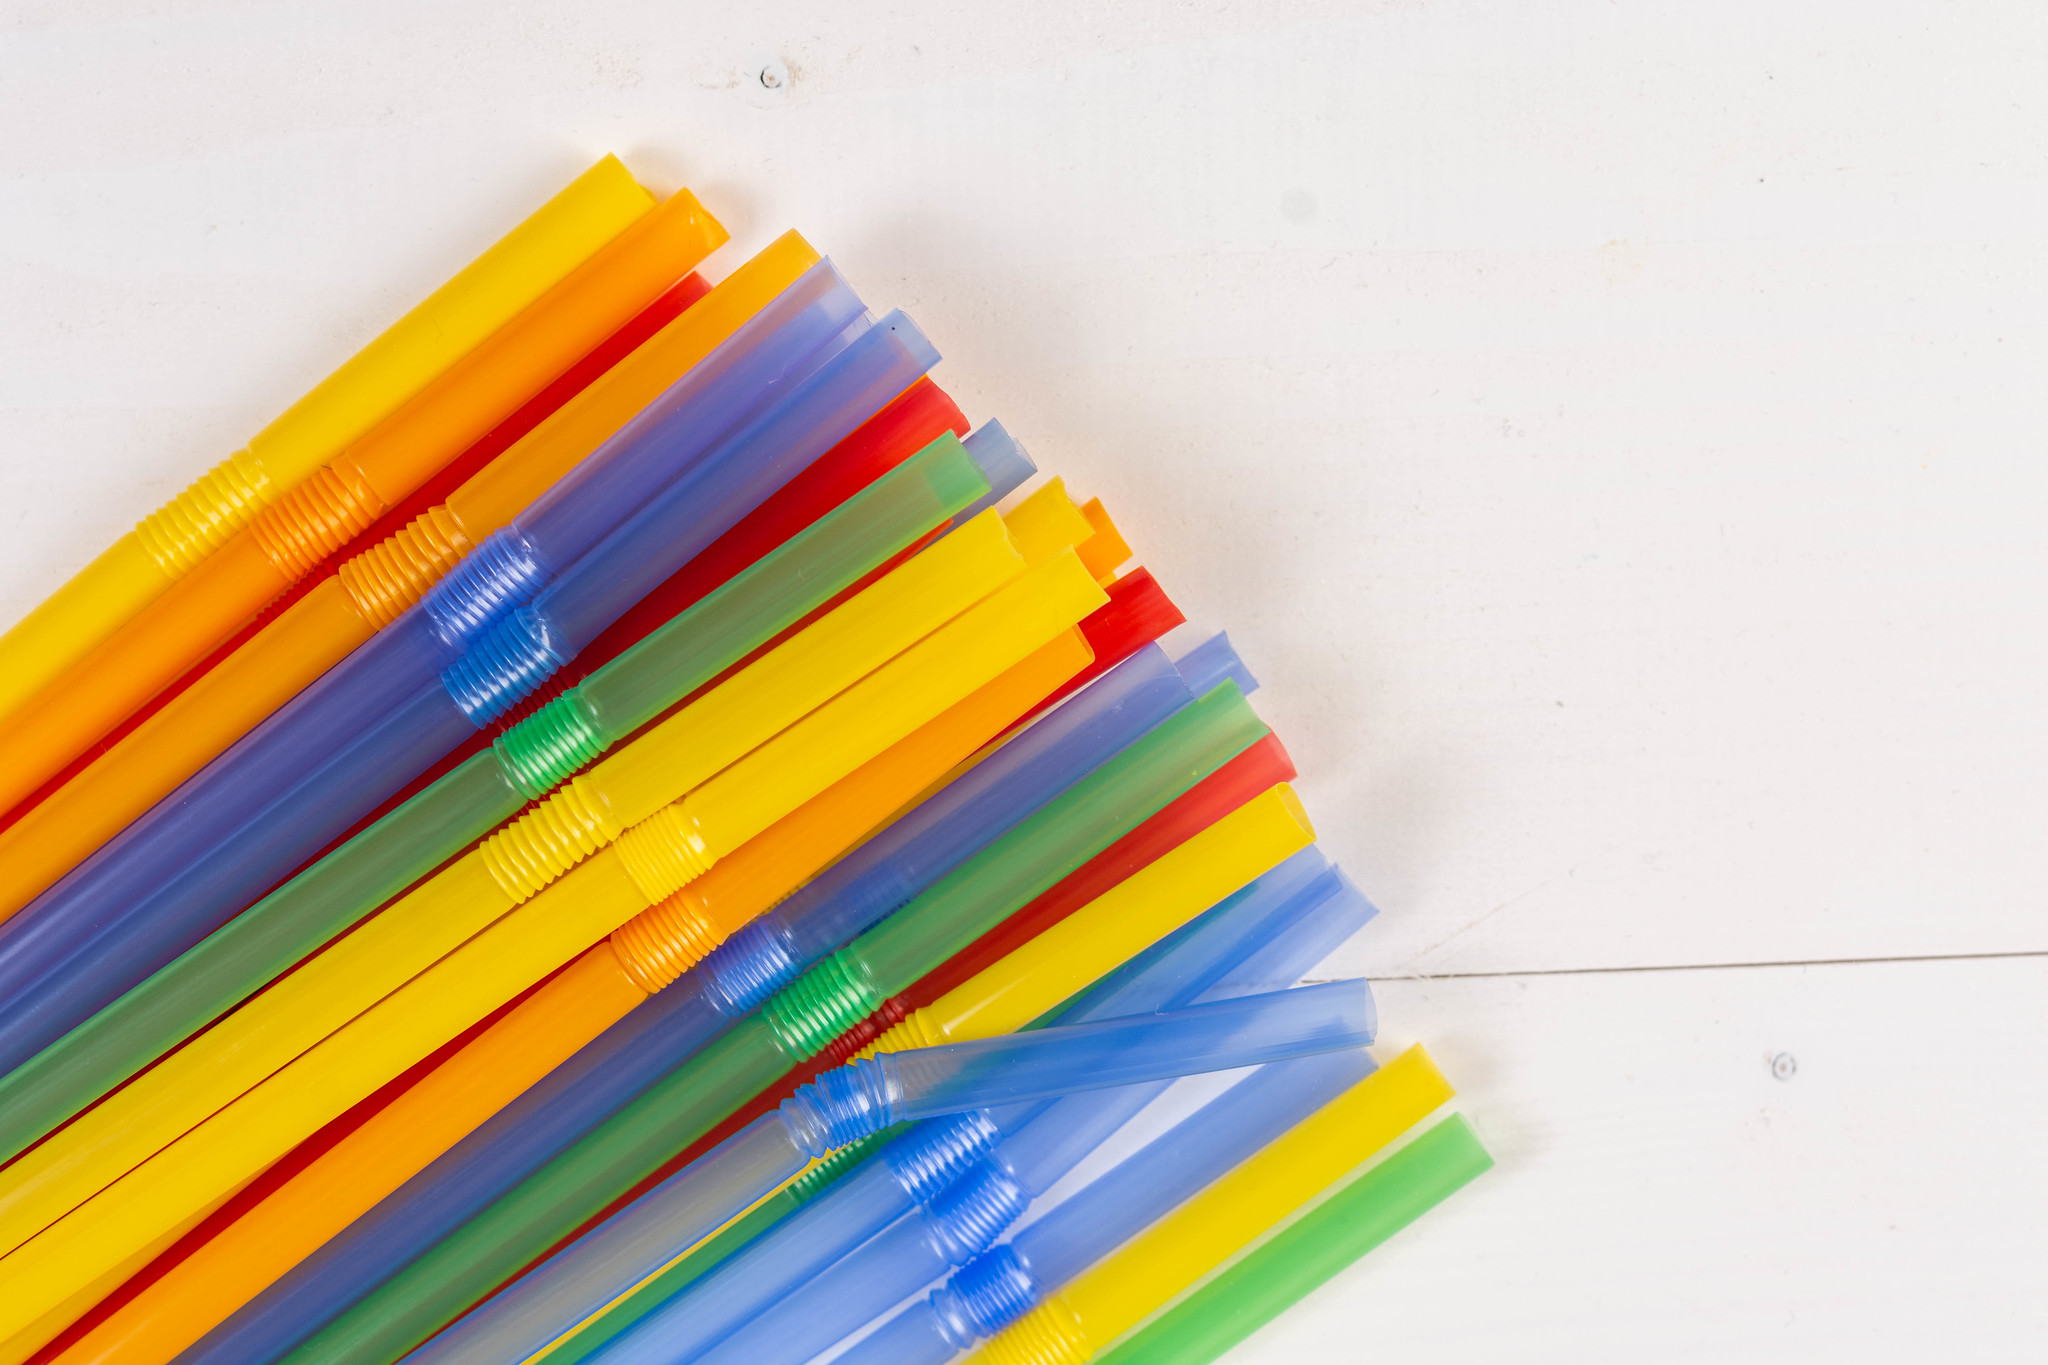 Colored Plastic Straws | Source: Flickr.com